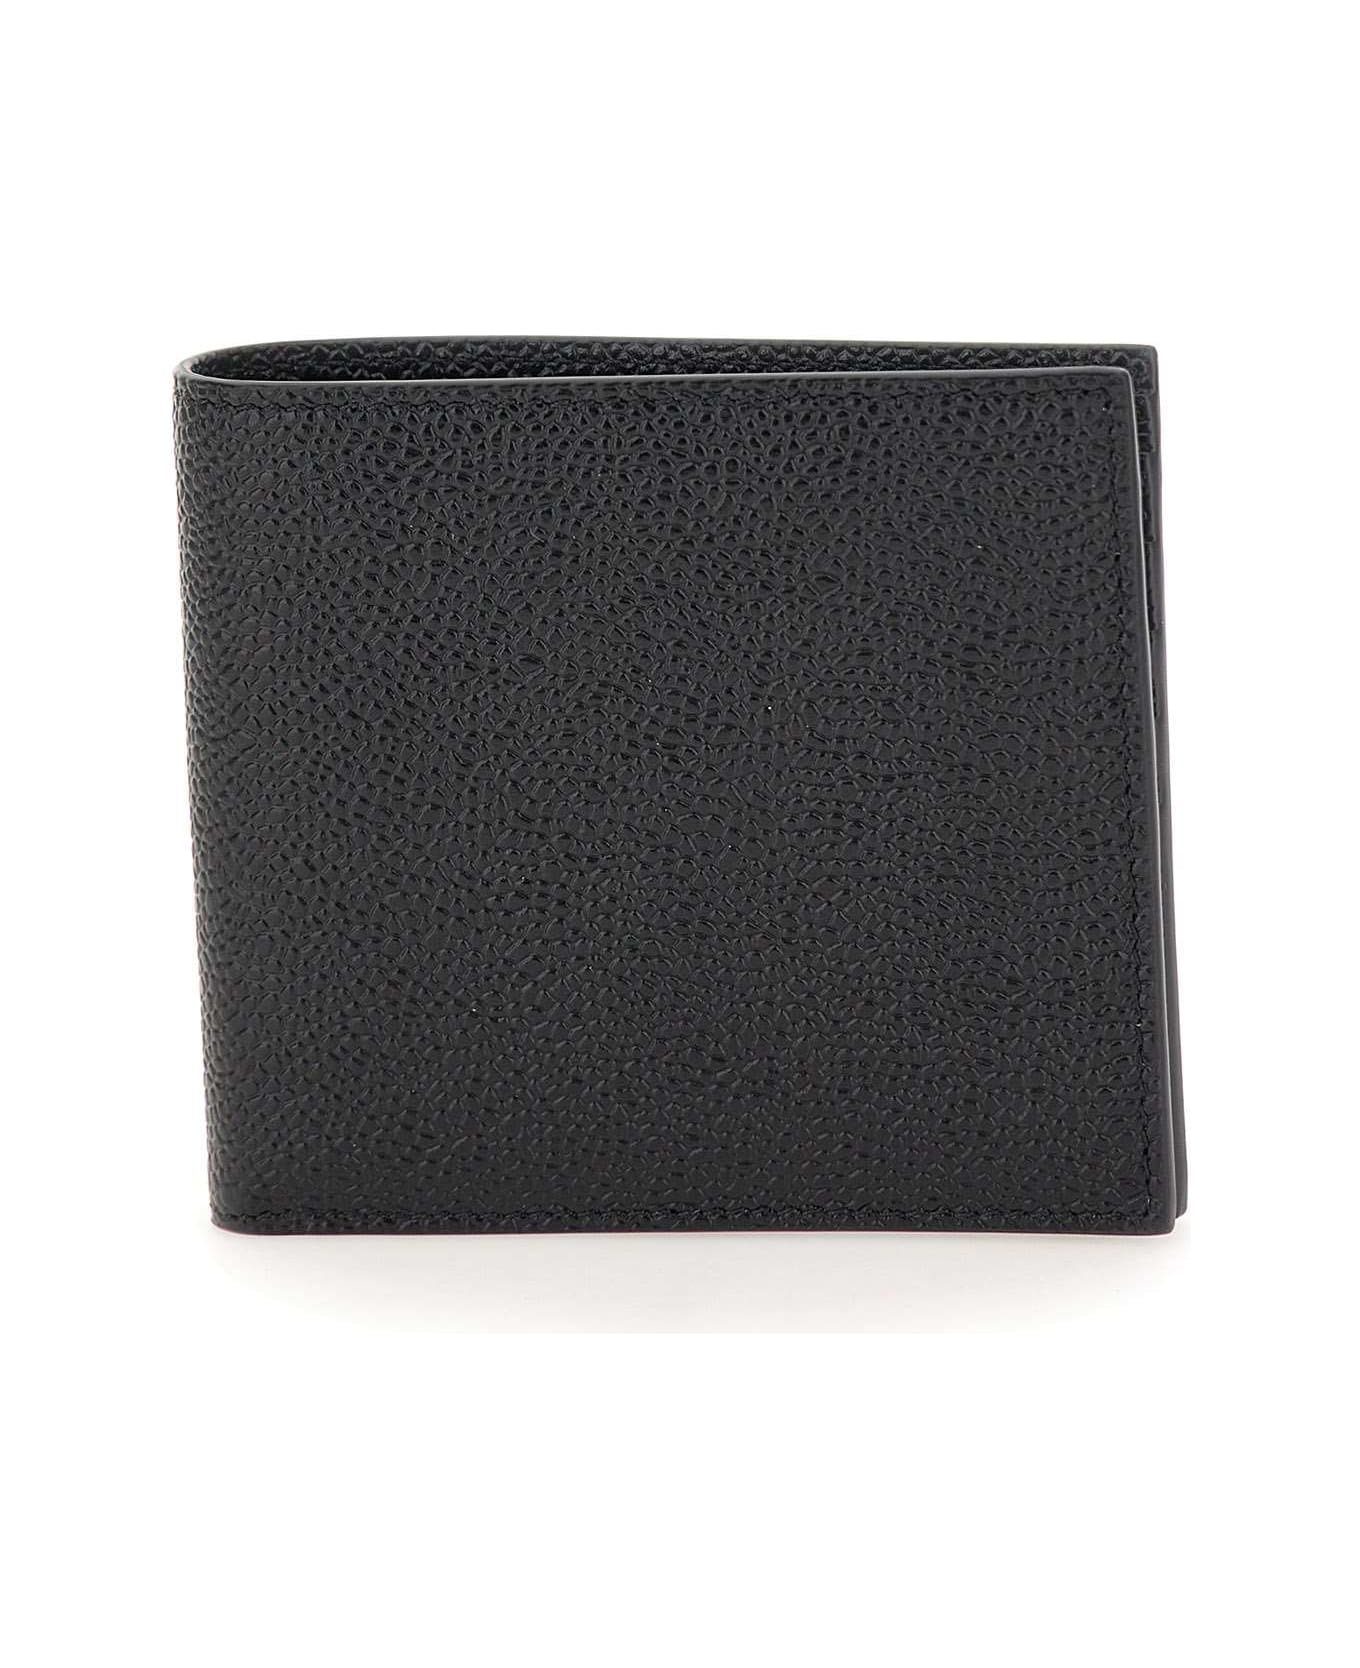 Thom Browne 'billfold' Leather Wallet - Black